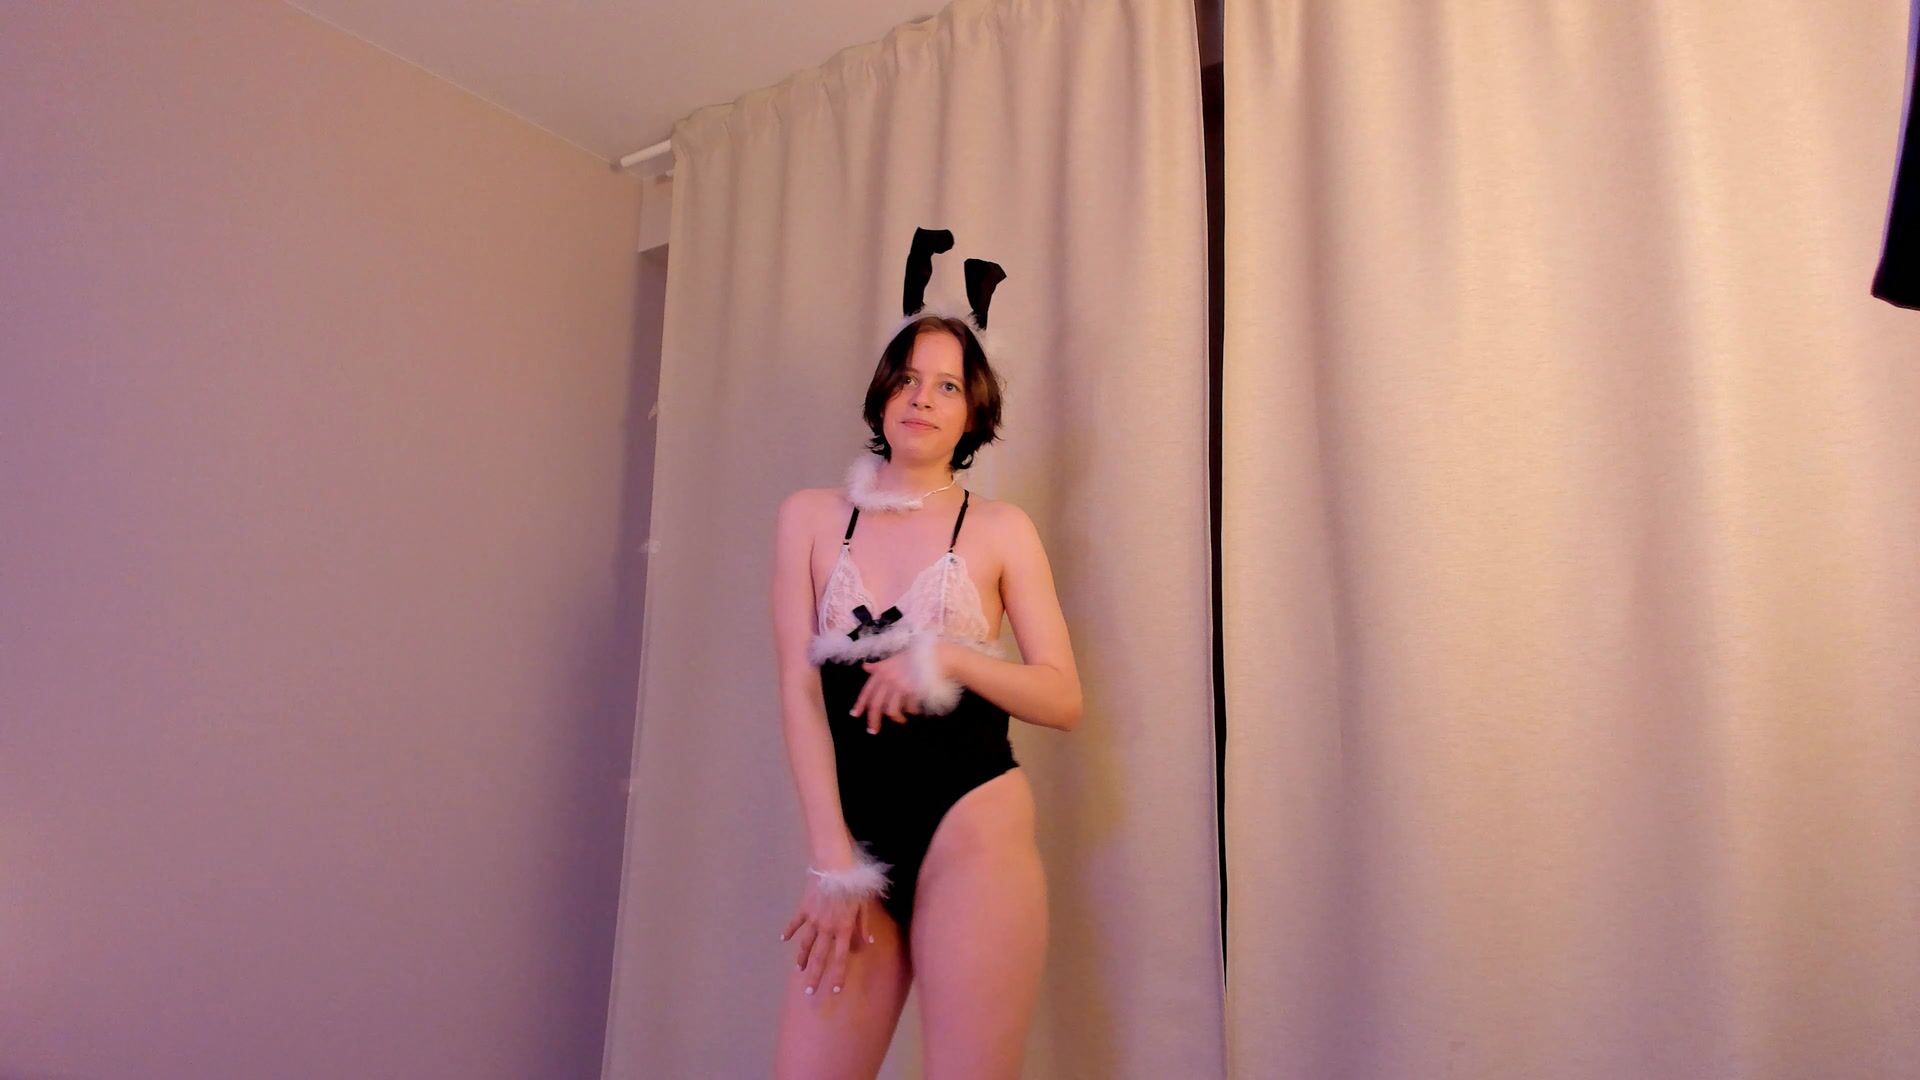 Bunny cosplay by Eva :)